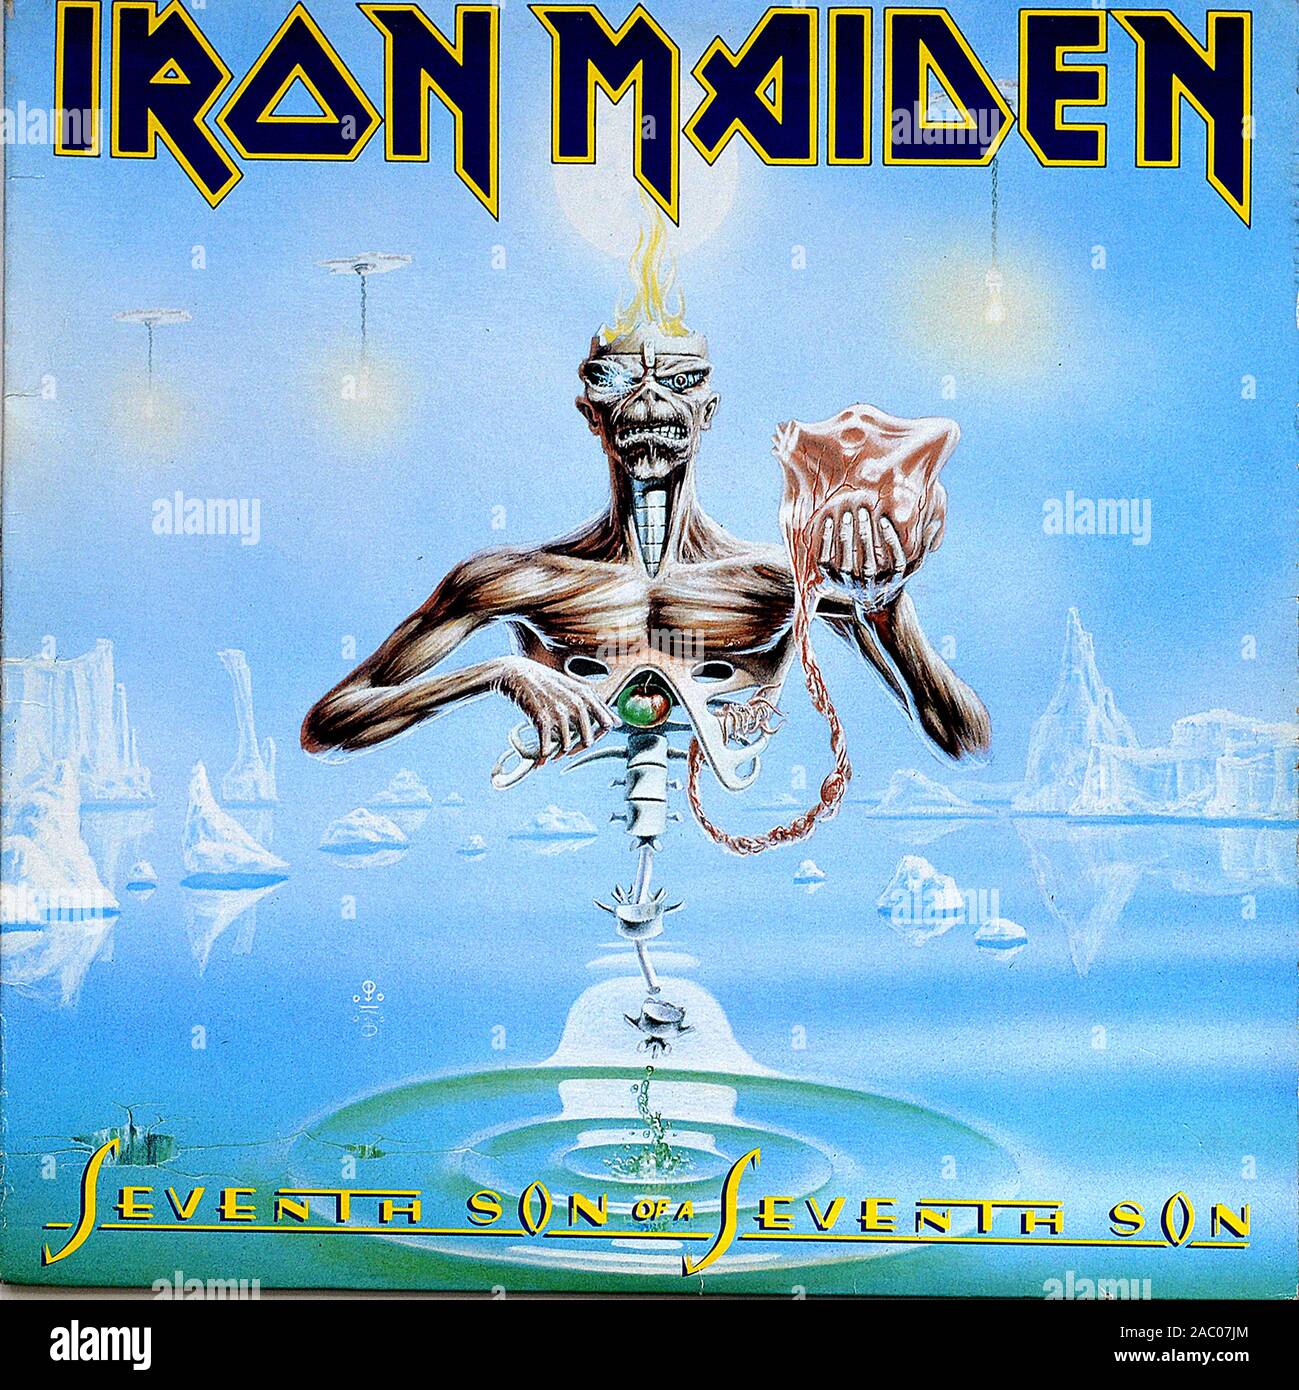 IRON MAIDEN Seventh Son of Son - Vintage vinyl album cover Stock Photo -  Alamy